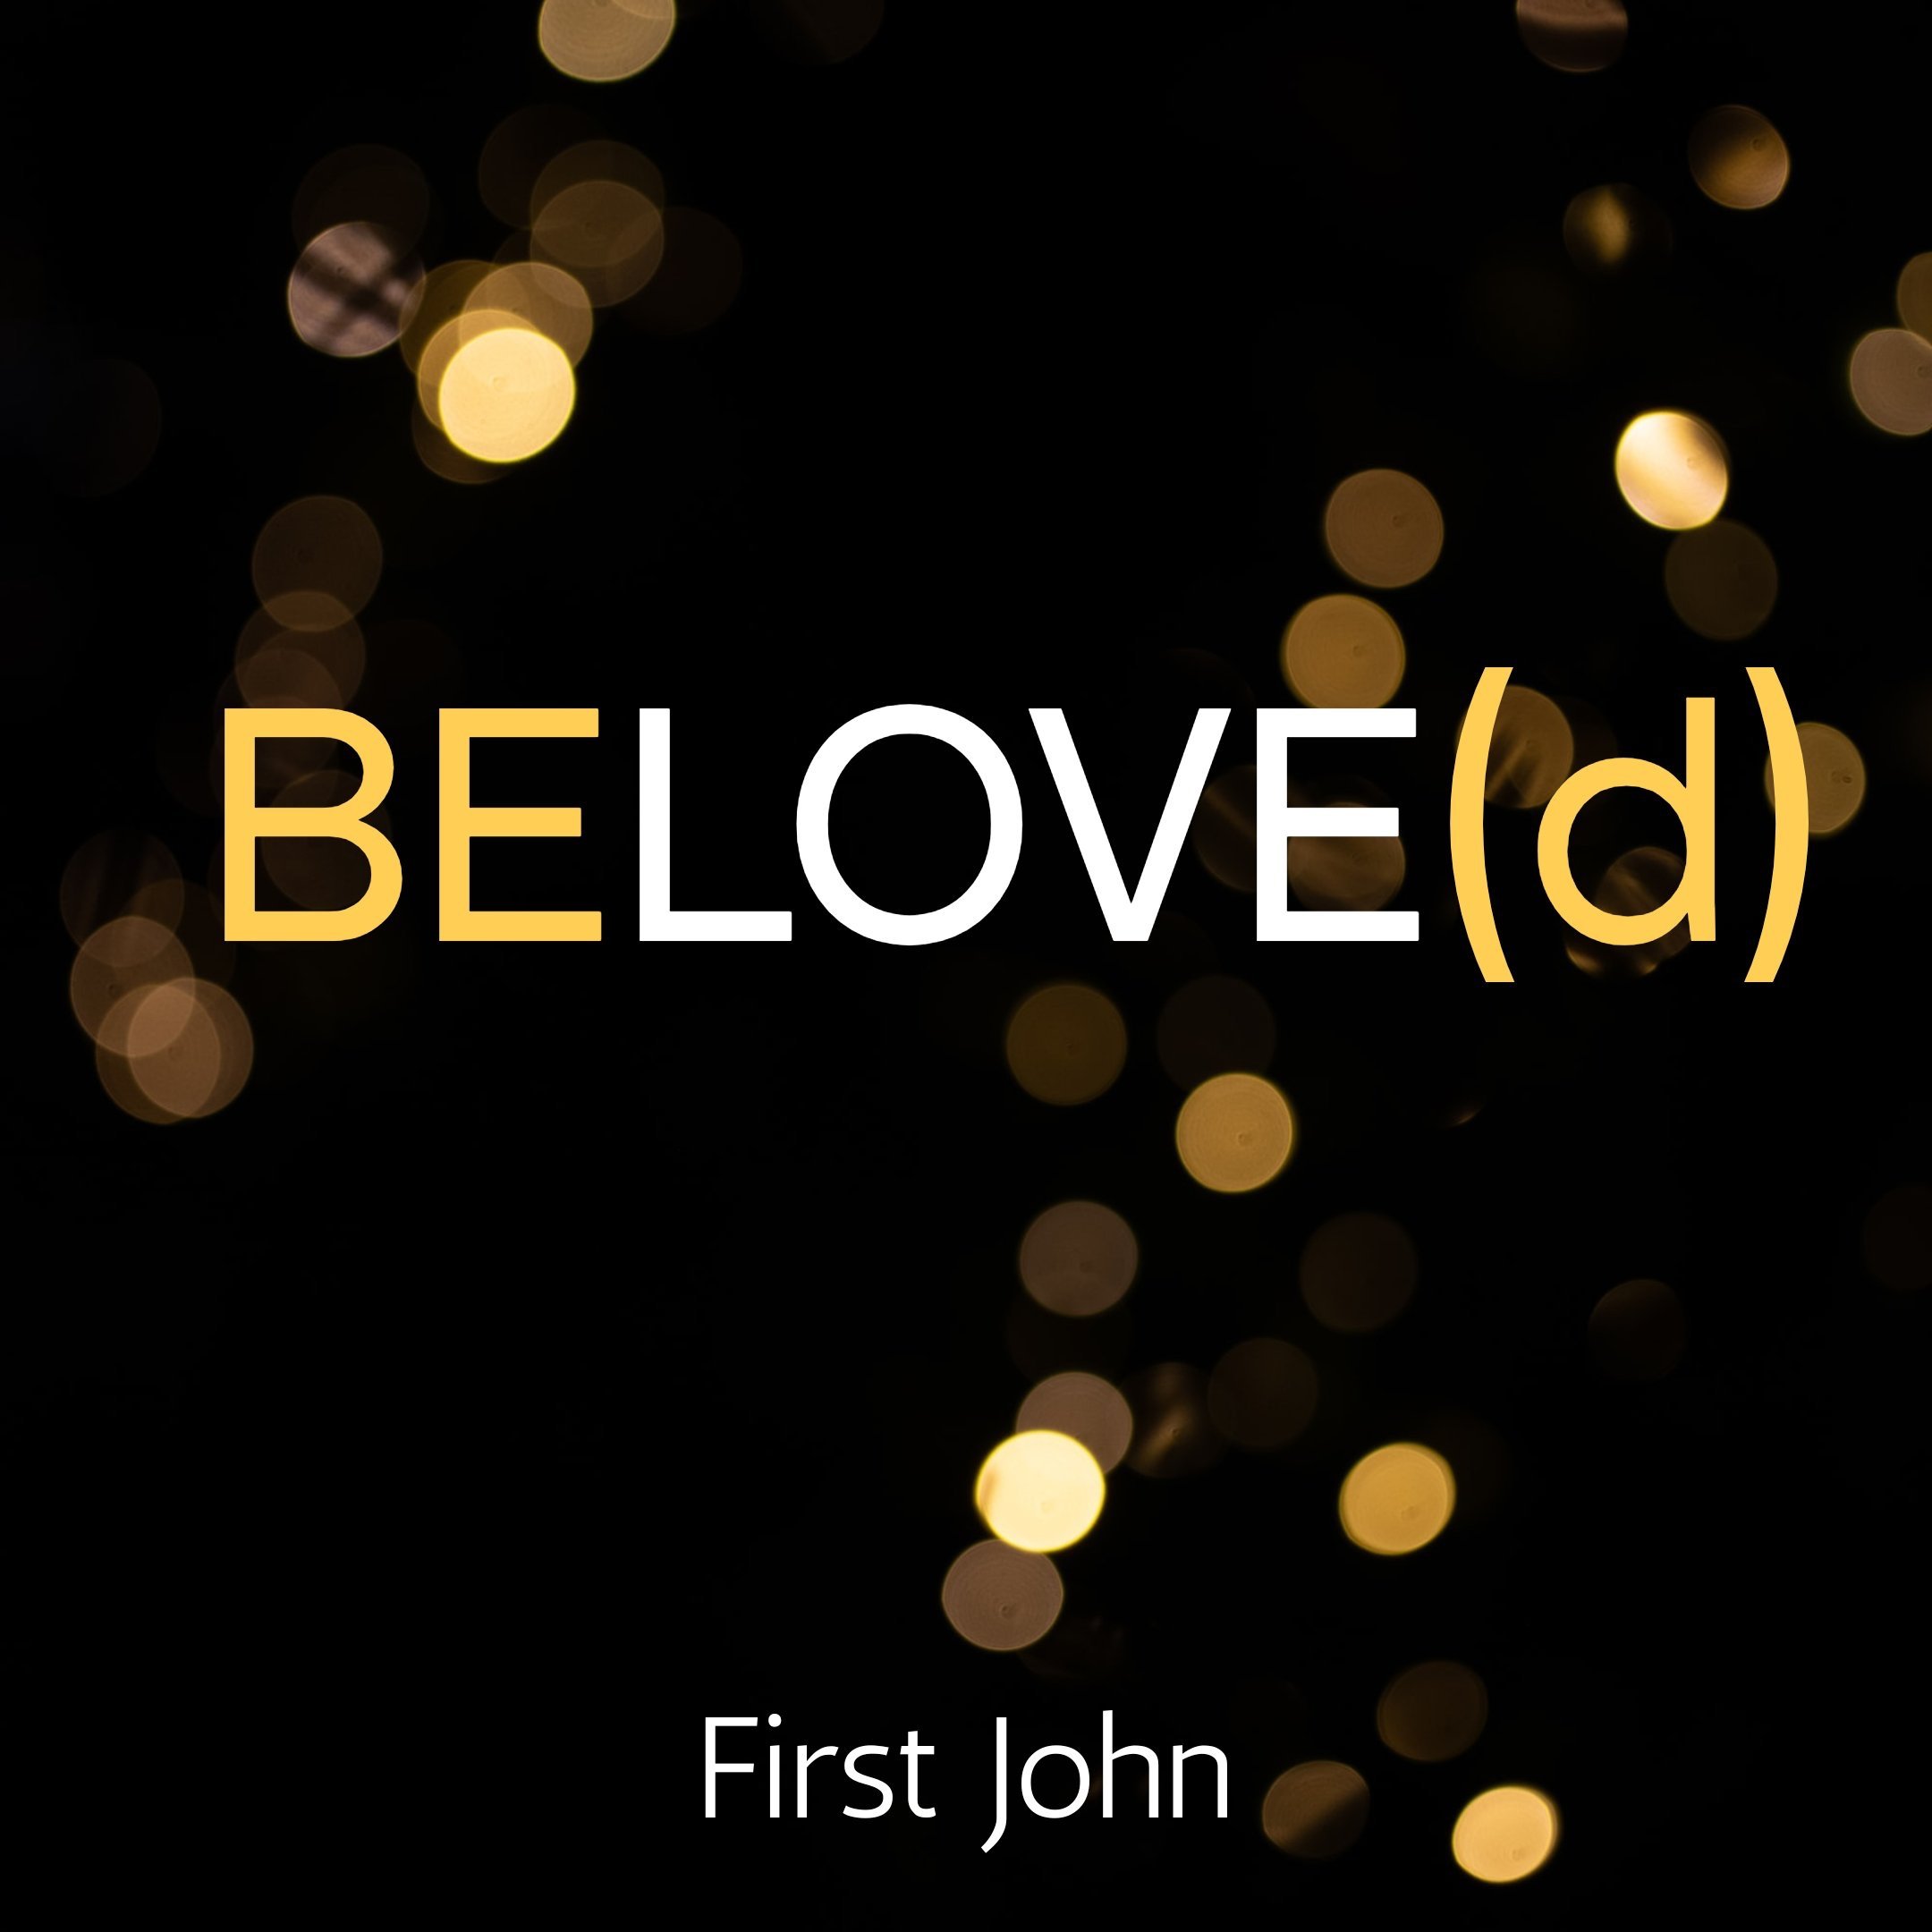 1+John+Beloved+SQ.jpg